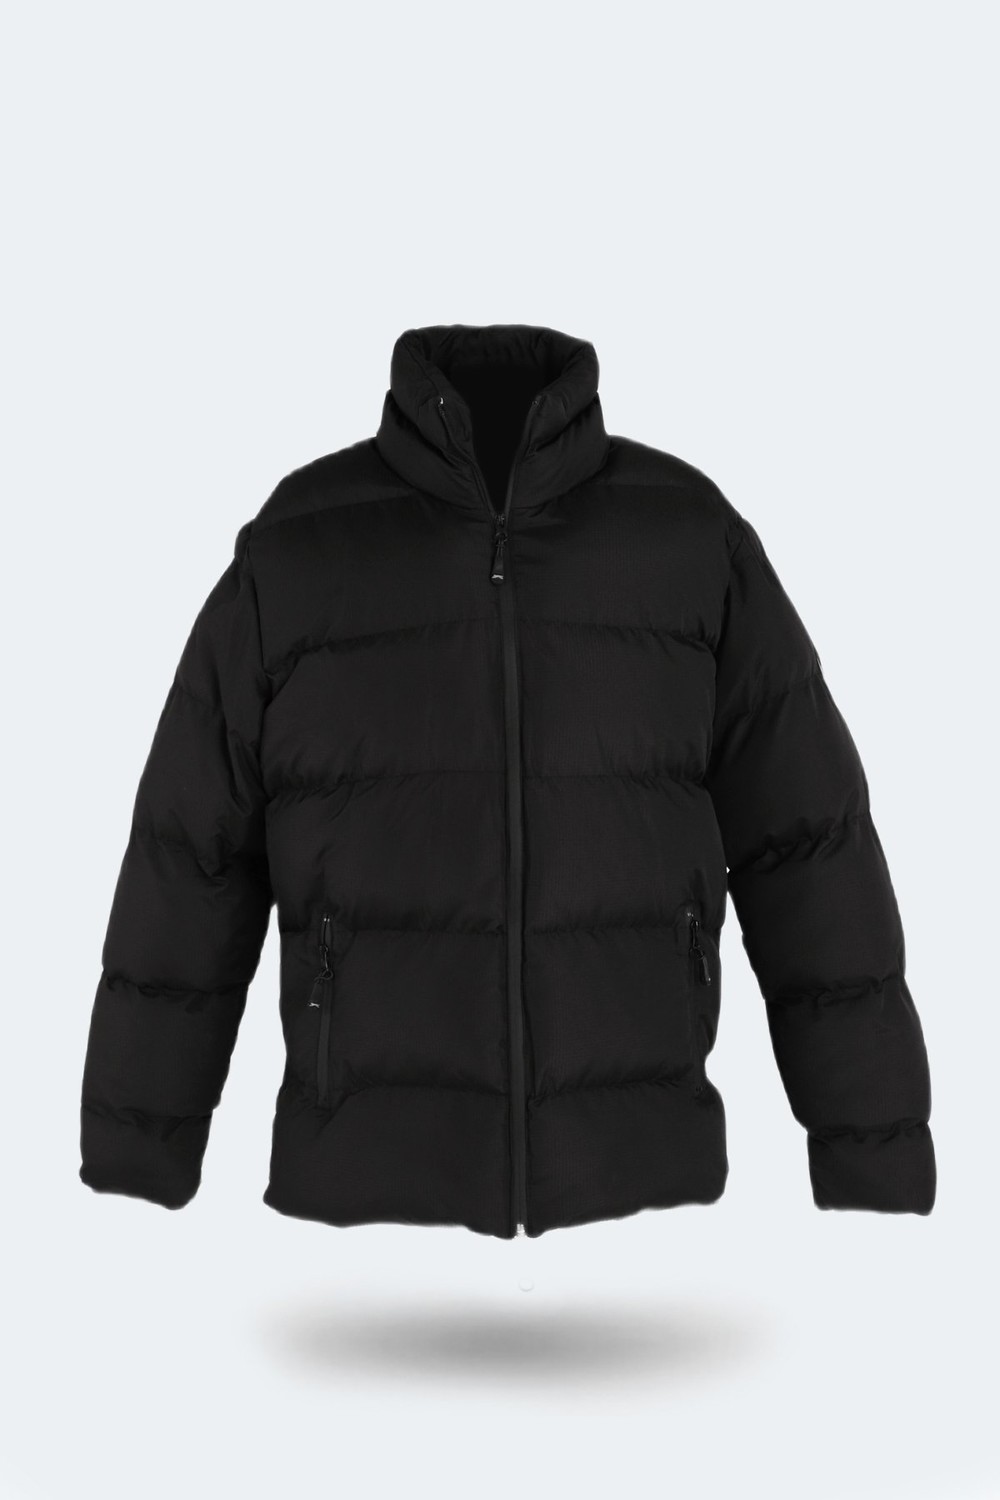 Slazenger HAMA Men's Plus Size Coat Black